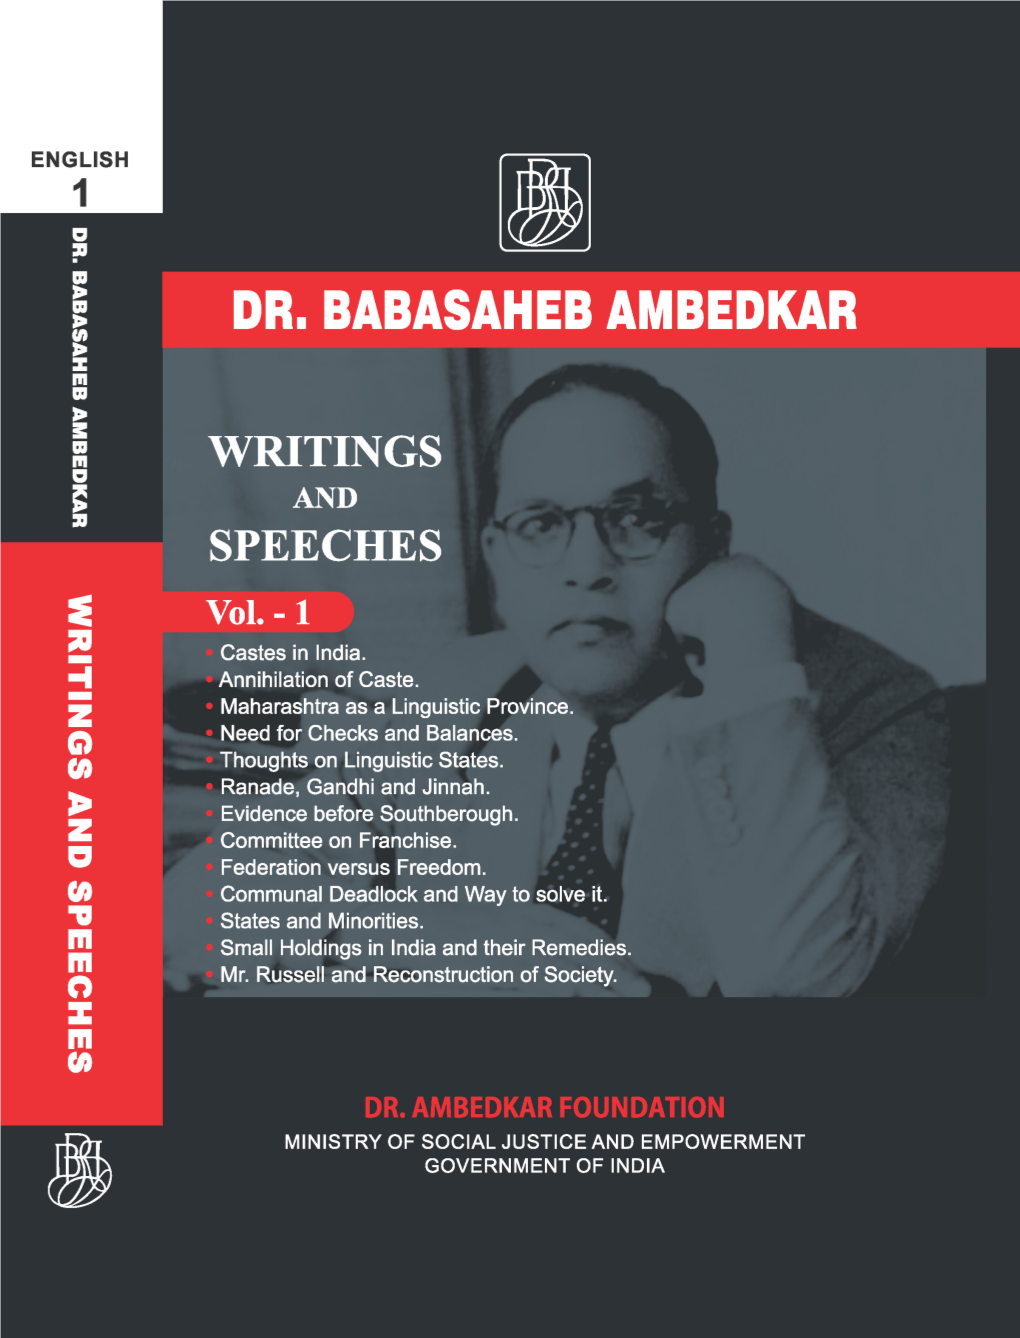 Dr. Babasaheb Ambedkar Writings & Speeches Vol. 1